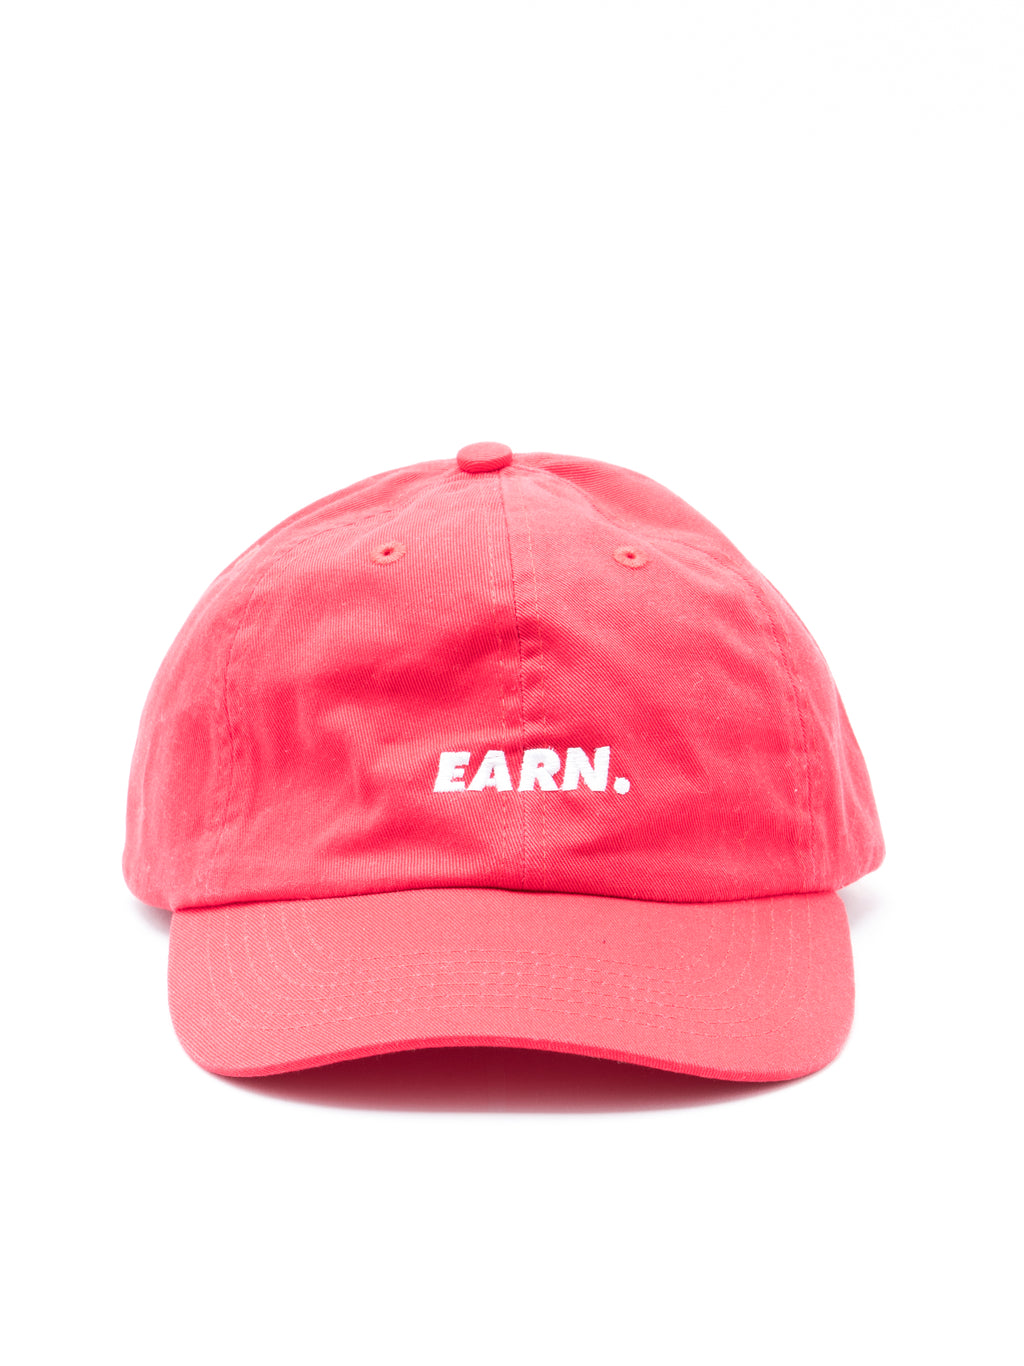 EARN W/ DOT DAD HAT - RED